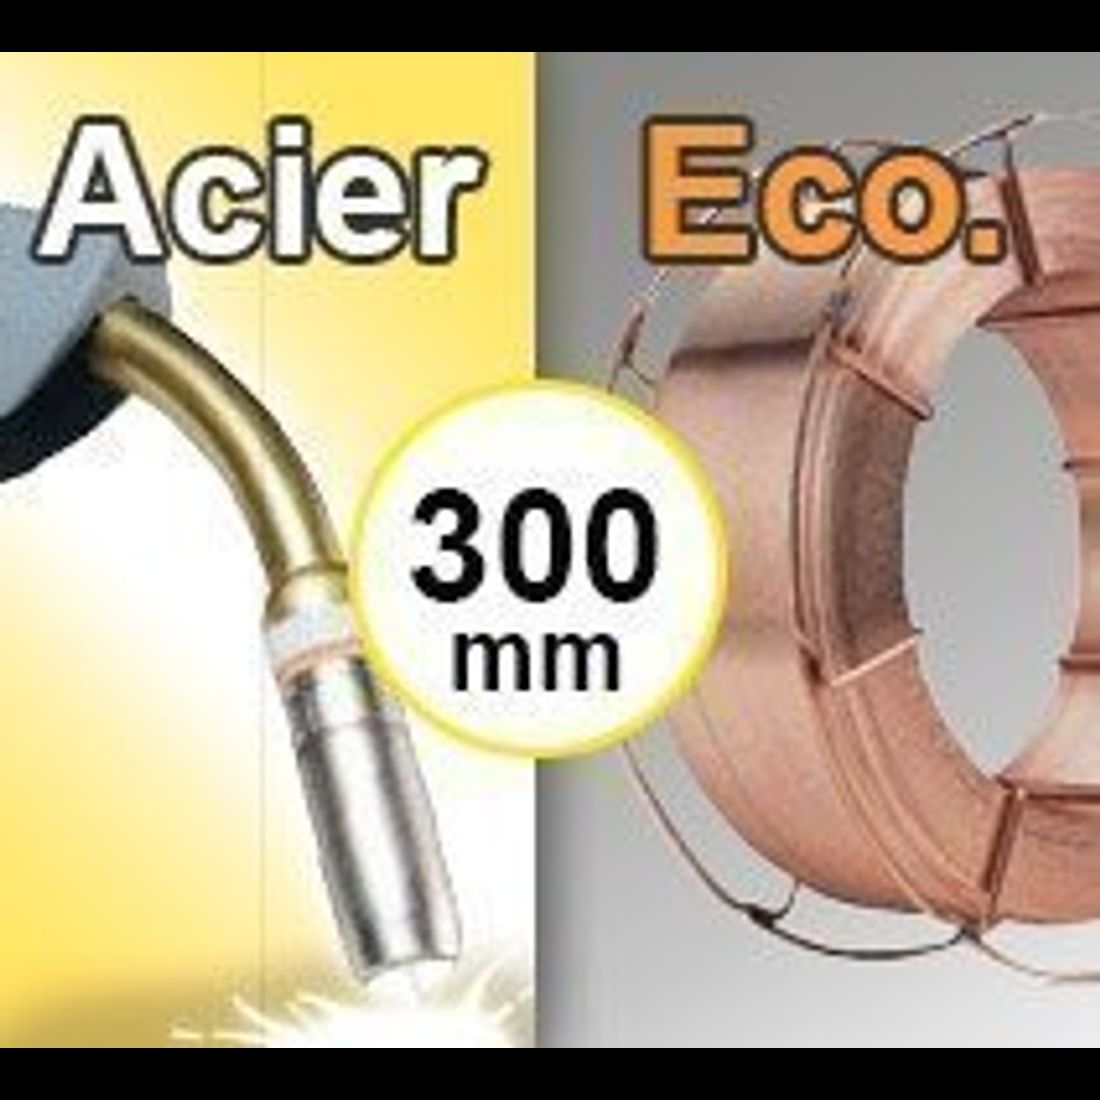 Bobine de fil ACIER Ecologique - Diamètre 300 mm